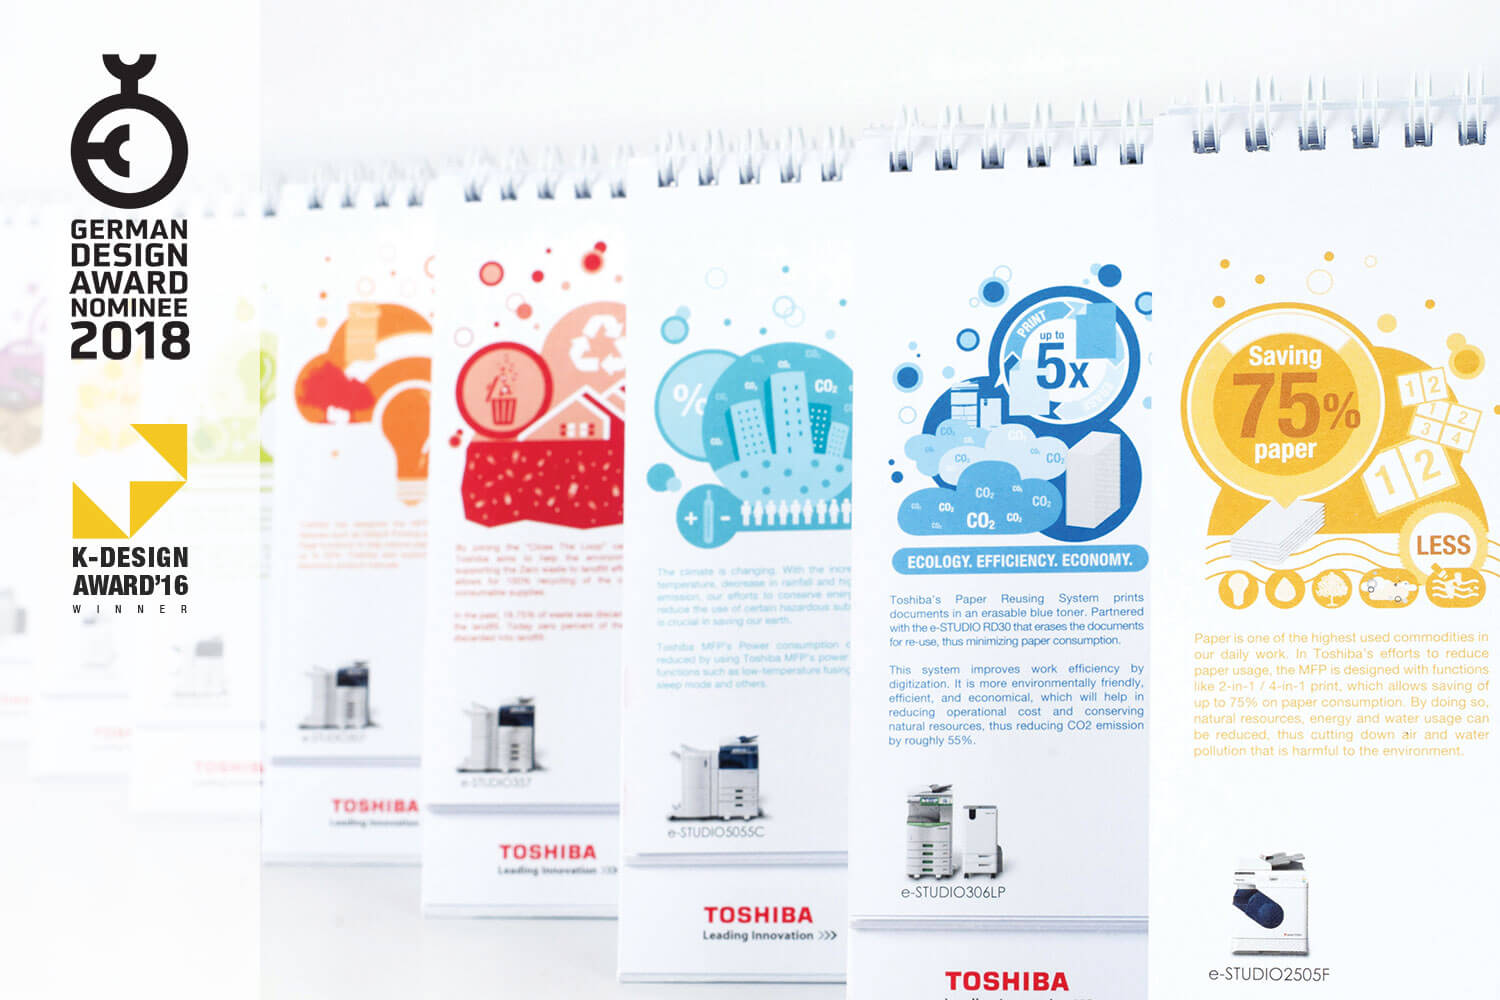 k-design award winner and German Design Award 2018 - Toshiba calendar design by Ideas People